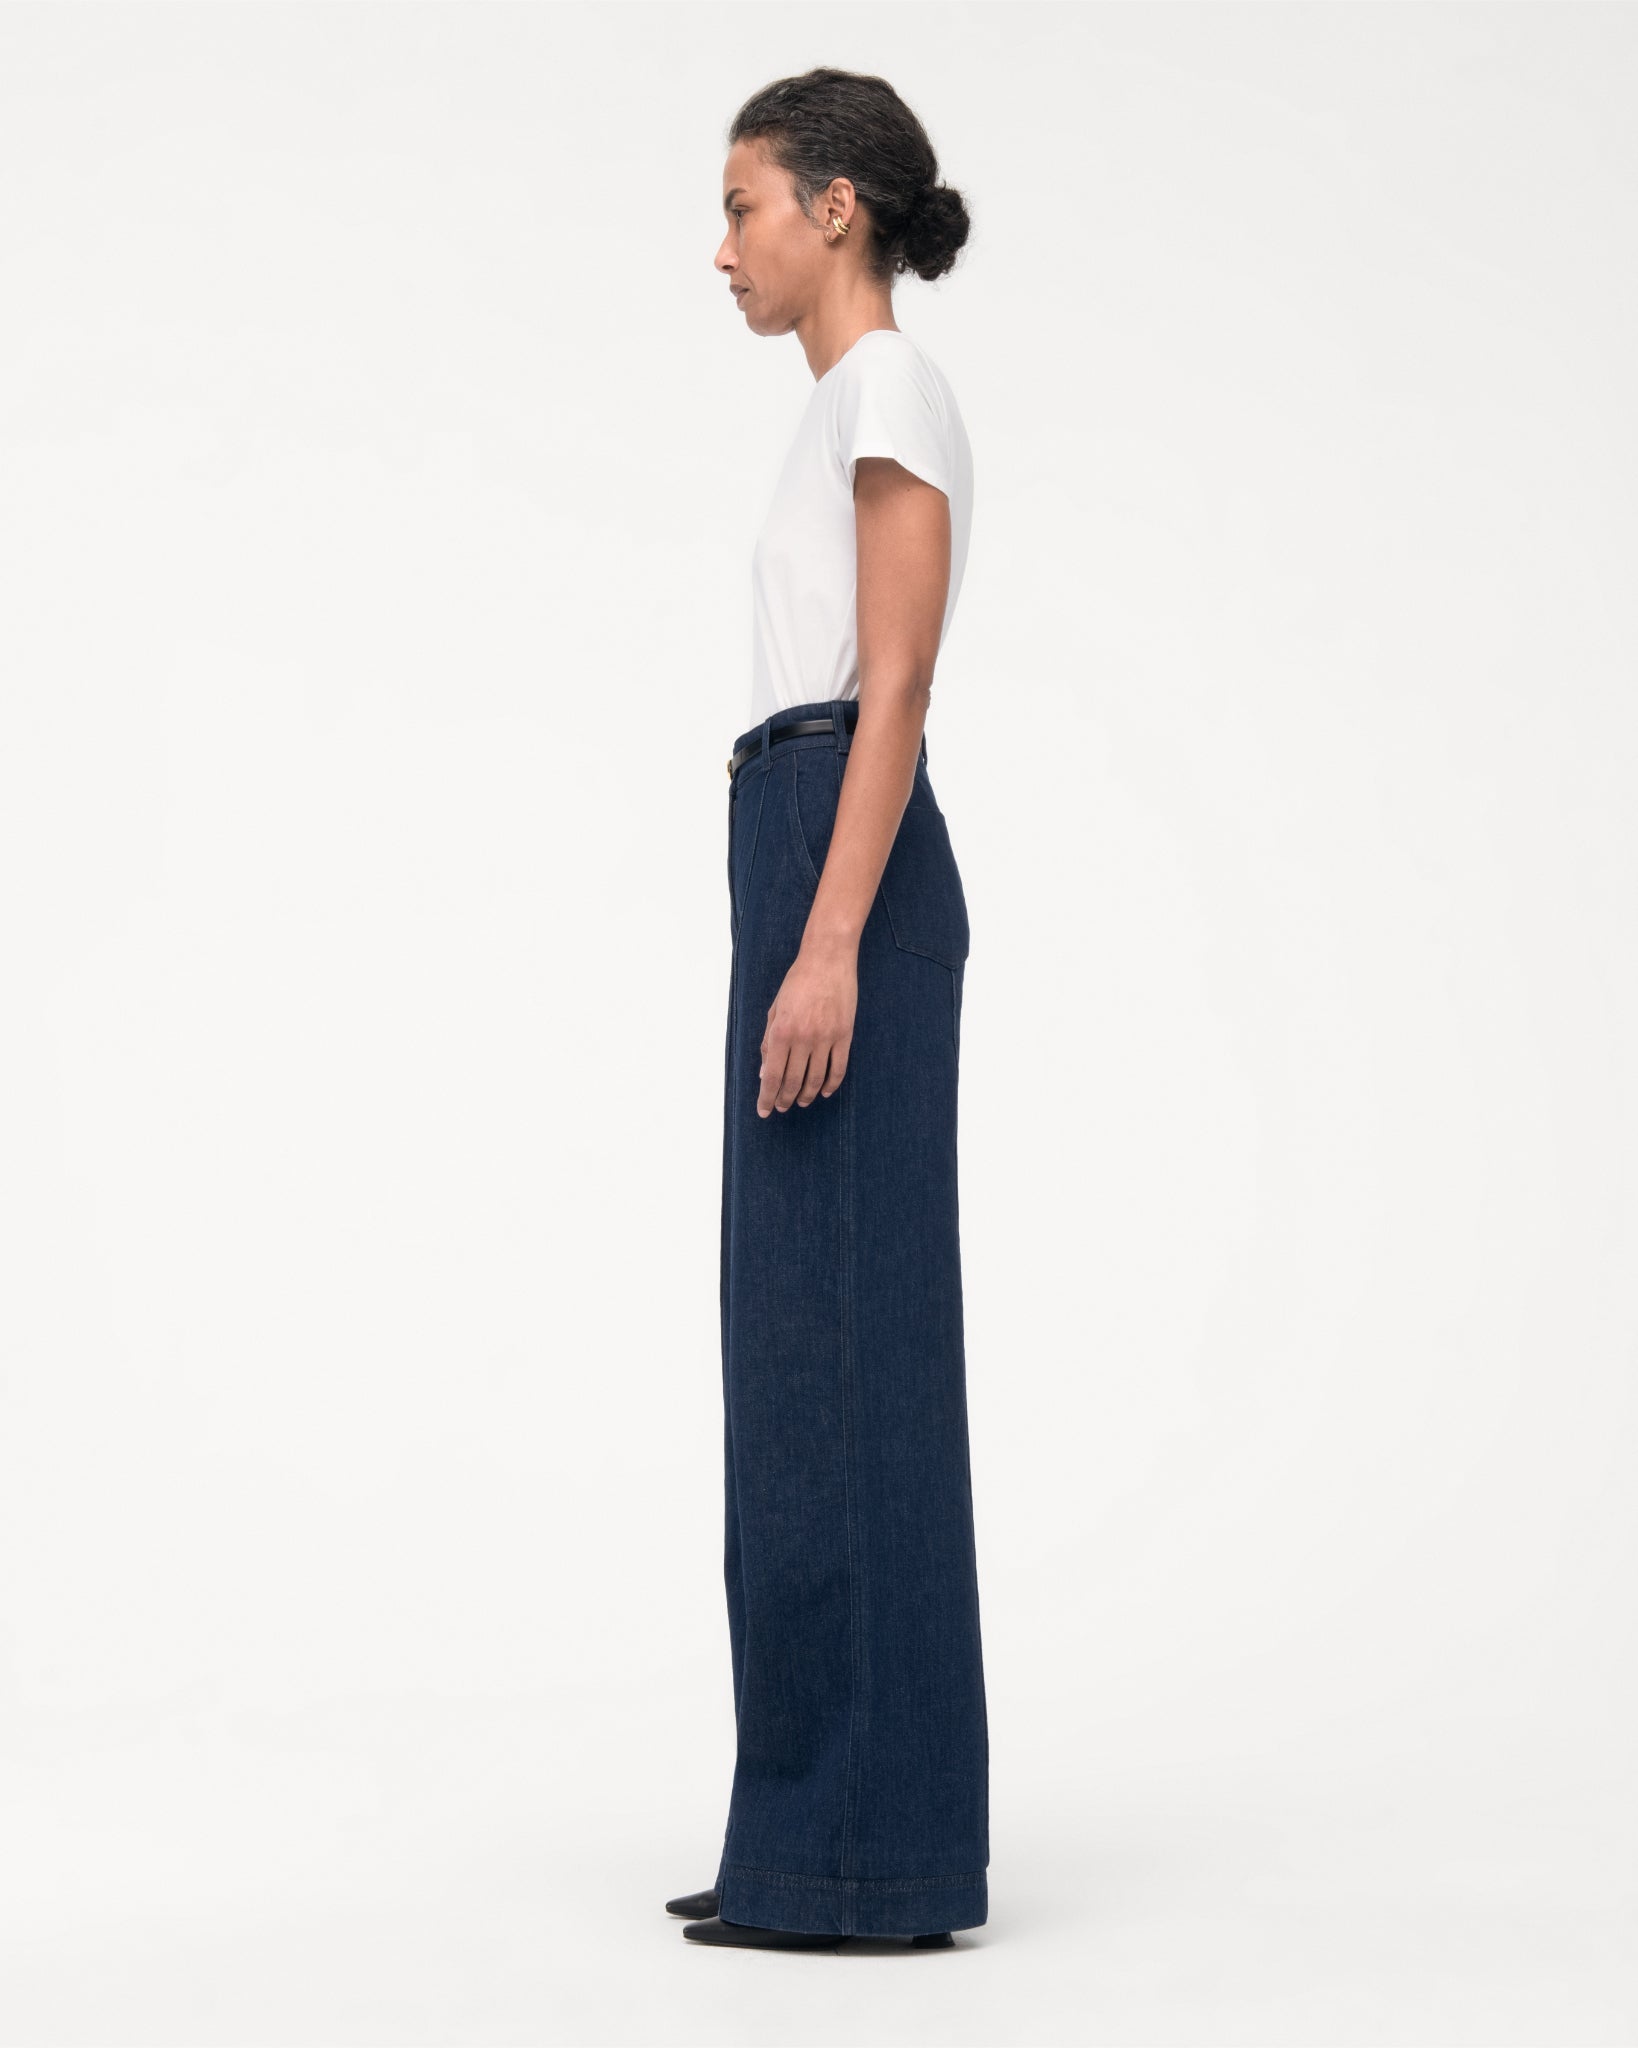 Jeans , Trousers , Skirts | SK13 flowy denim SKIRT. Japanese brand ,  premium quality and like brand new . Faveee! Waist: 26-28 Hips: 40 Length:  36.5 MODEL : 5'3,... | Instagram